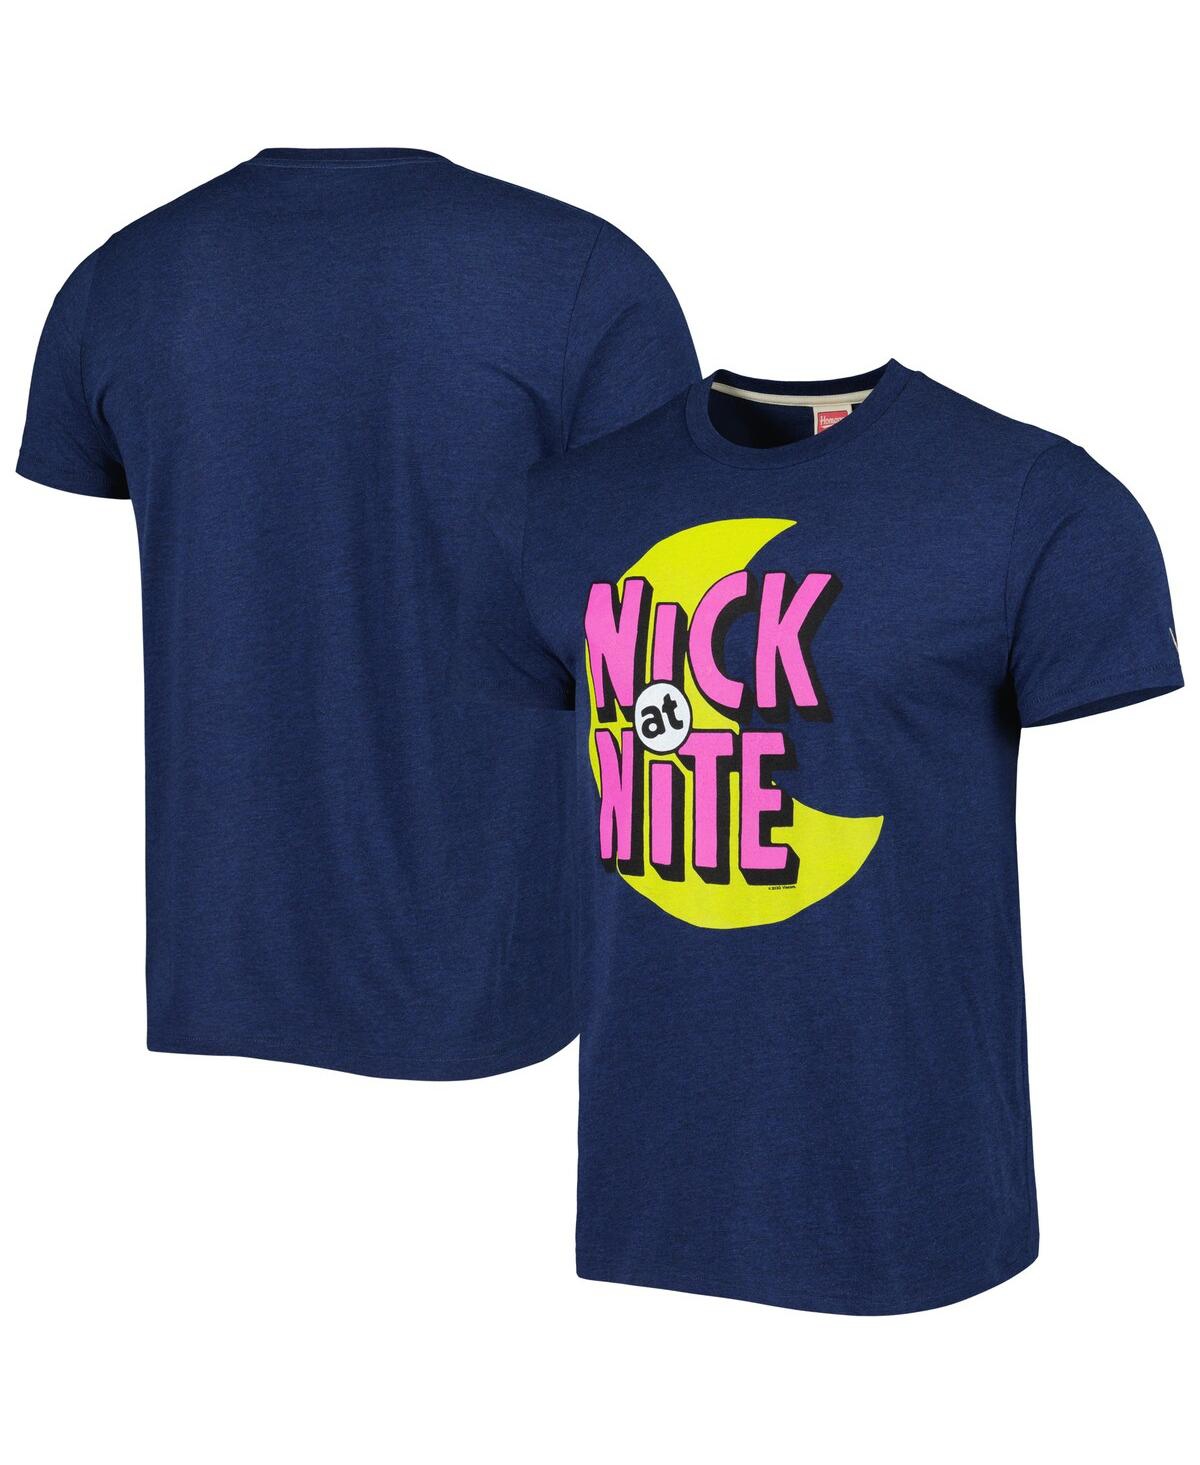 Men's and Women's Homage Navy Nick at Nite Tri-Blend T-shirt - Navy